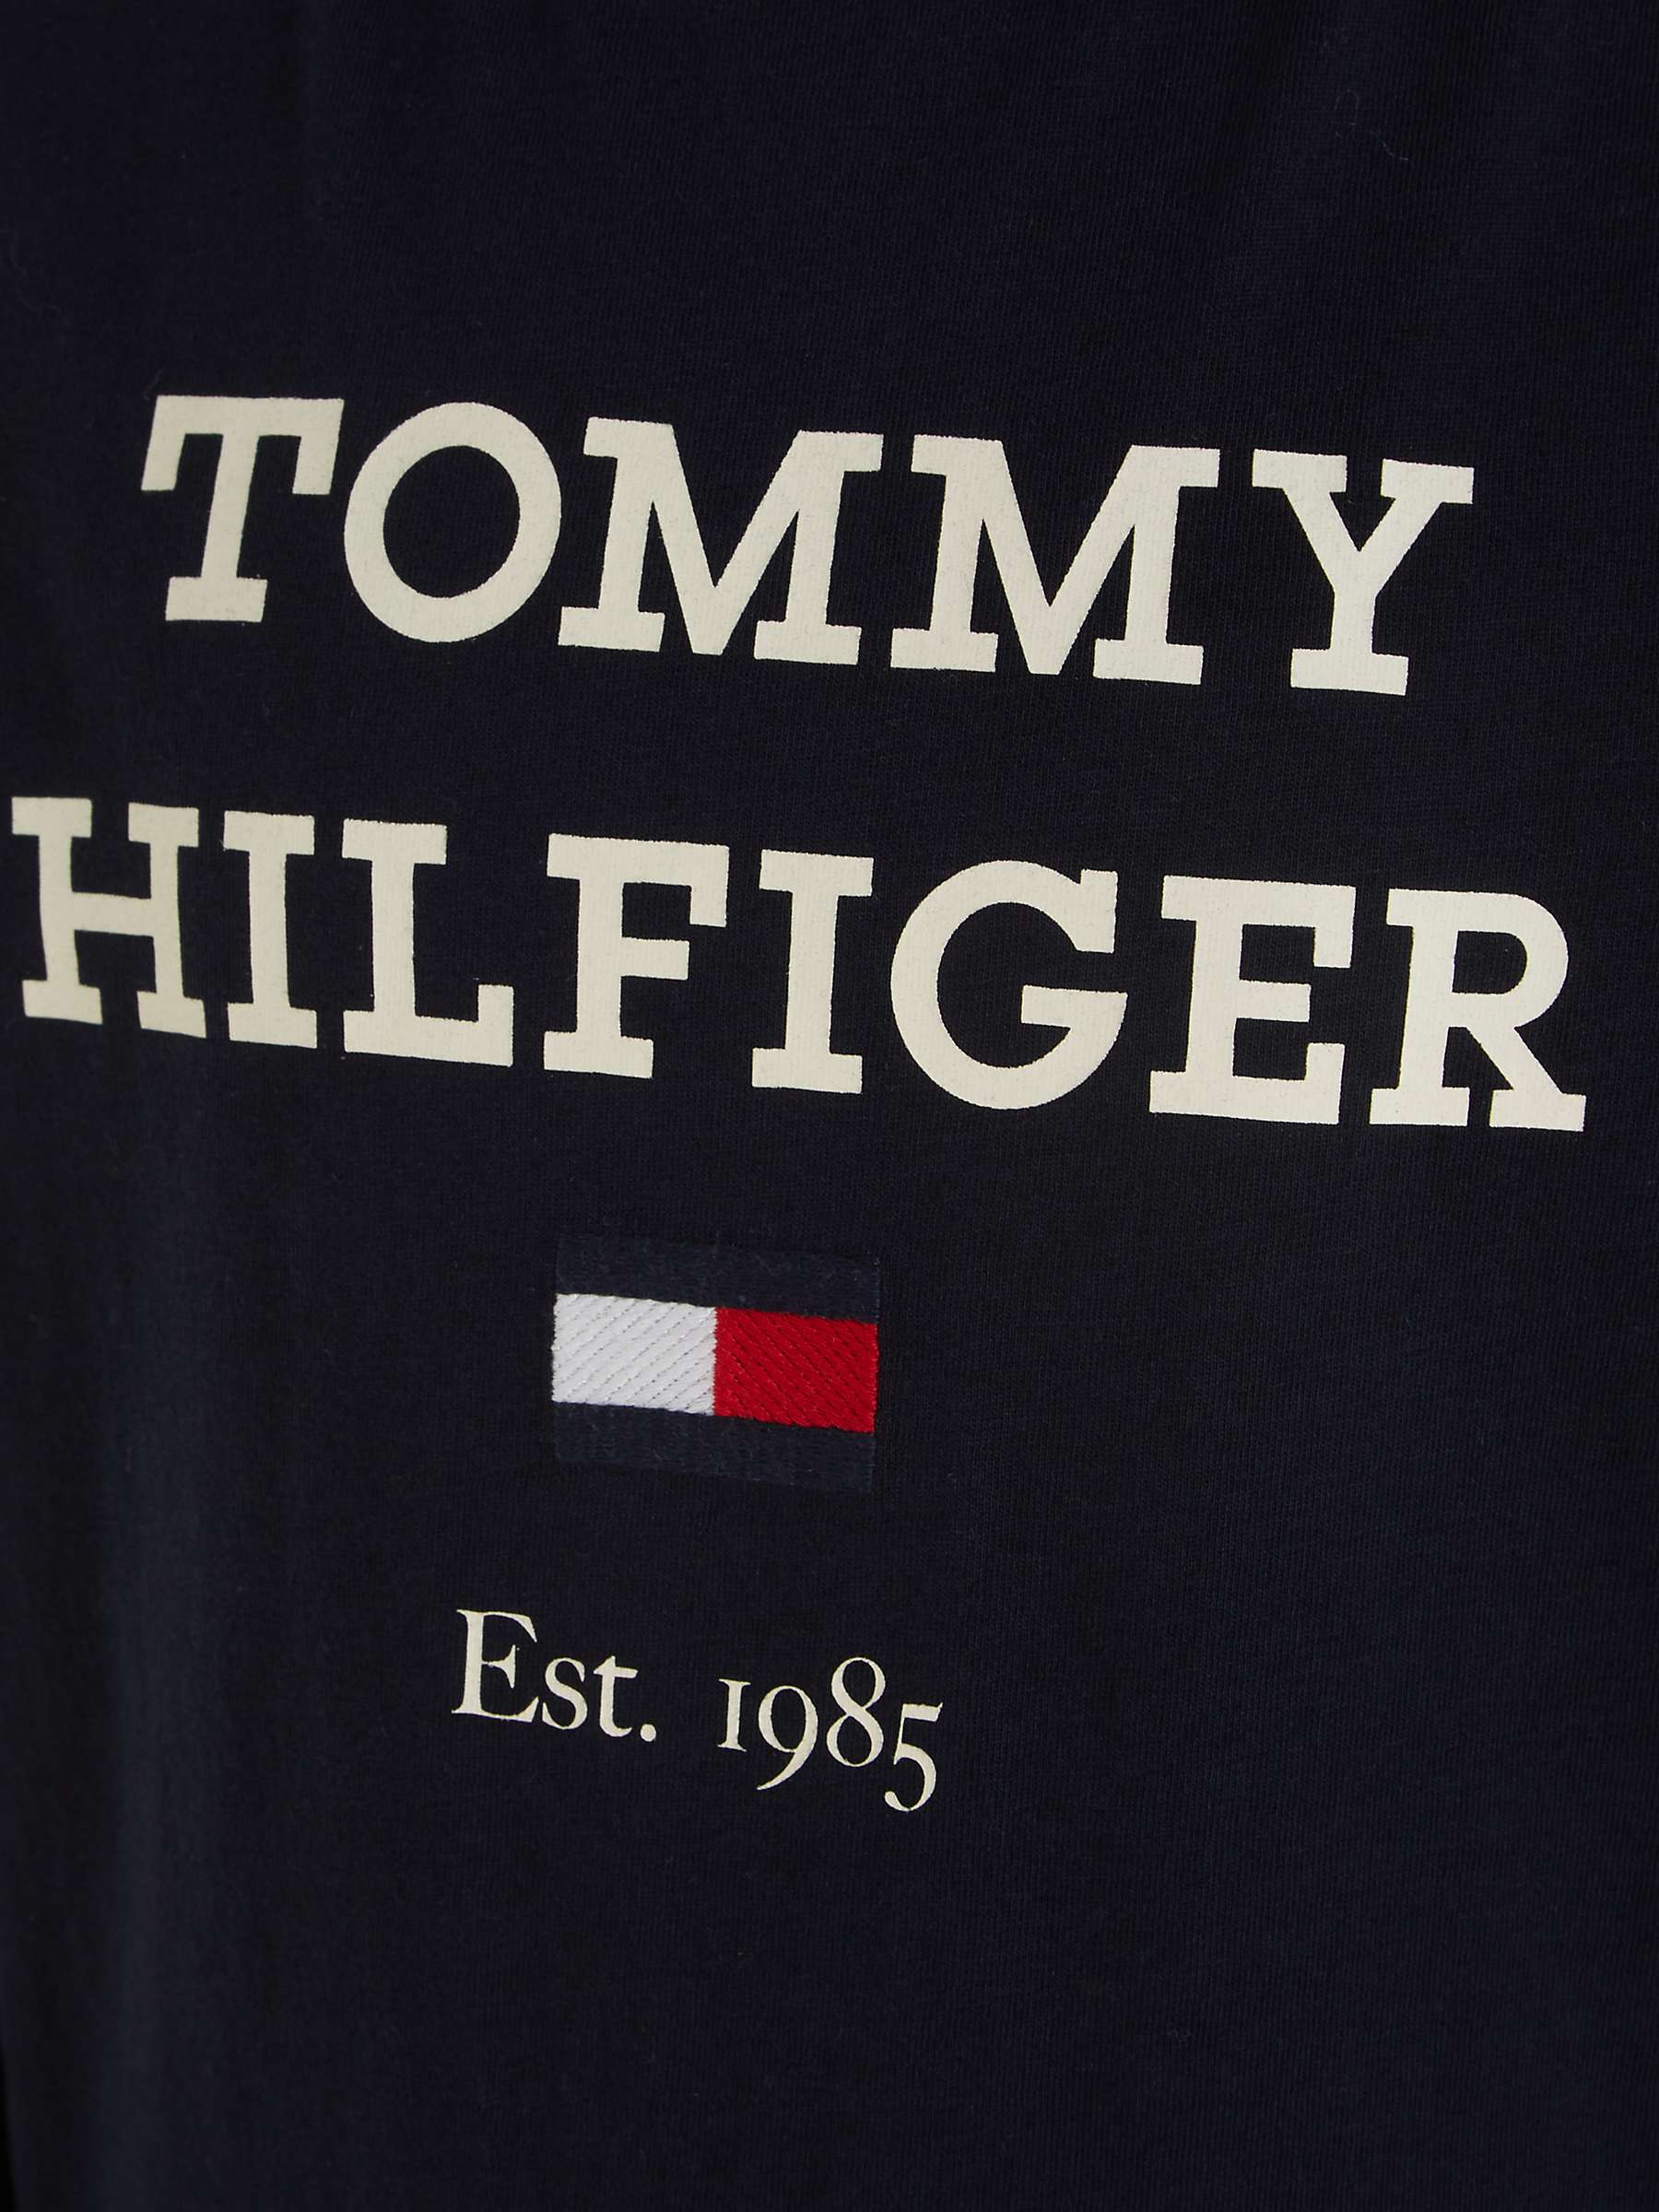 Buy Tommy Hilfiger Kids' Logo Long Sleeve Crew Neck T-Shirt, Desert Sky Online at johnlewis.com